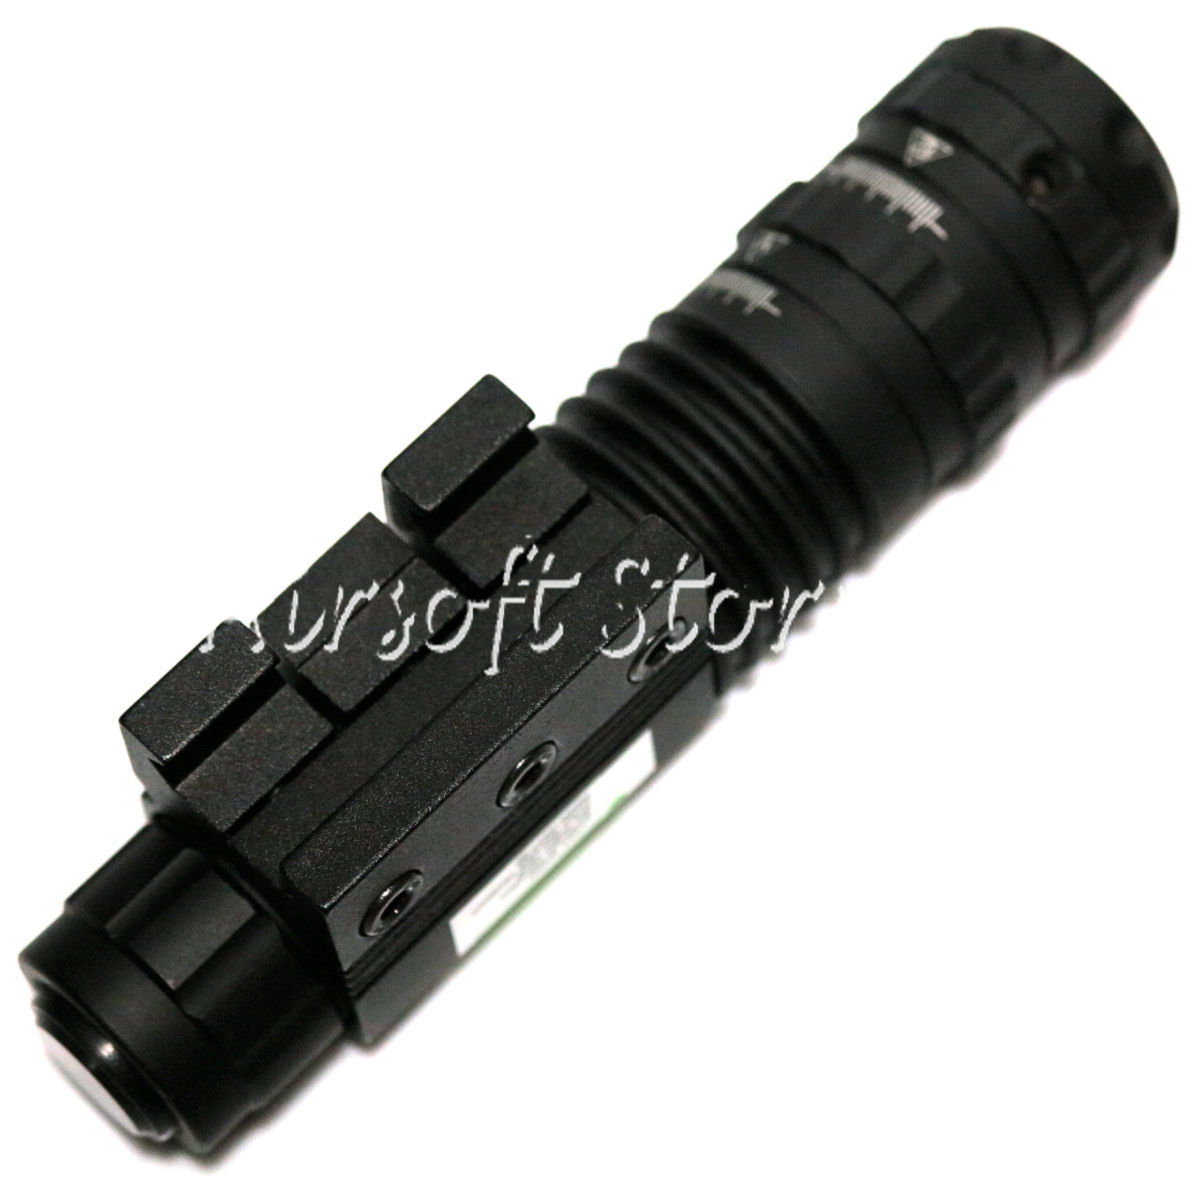 LXGD Tactical Gear High Power Visible Green Laser Sight Pointer JG-018